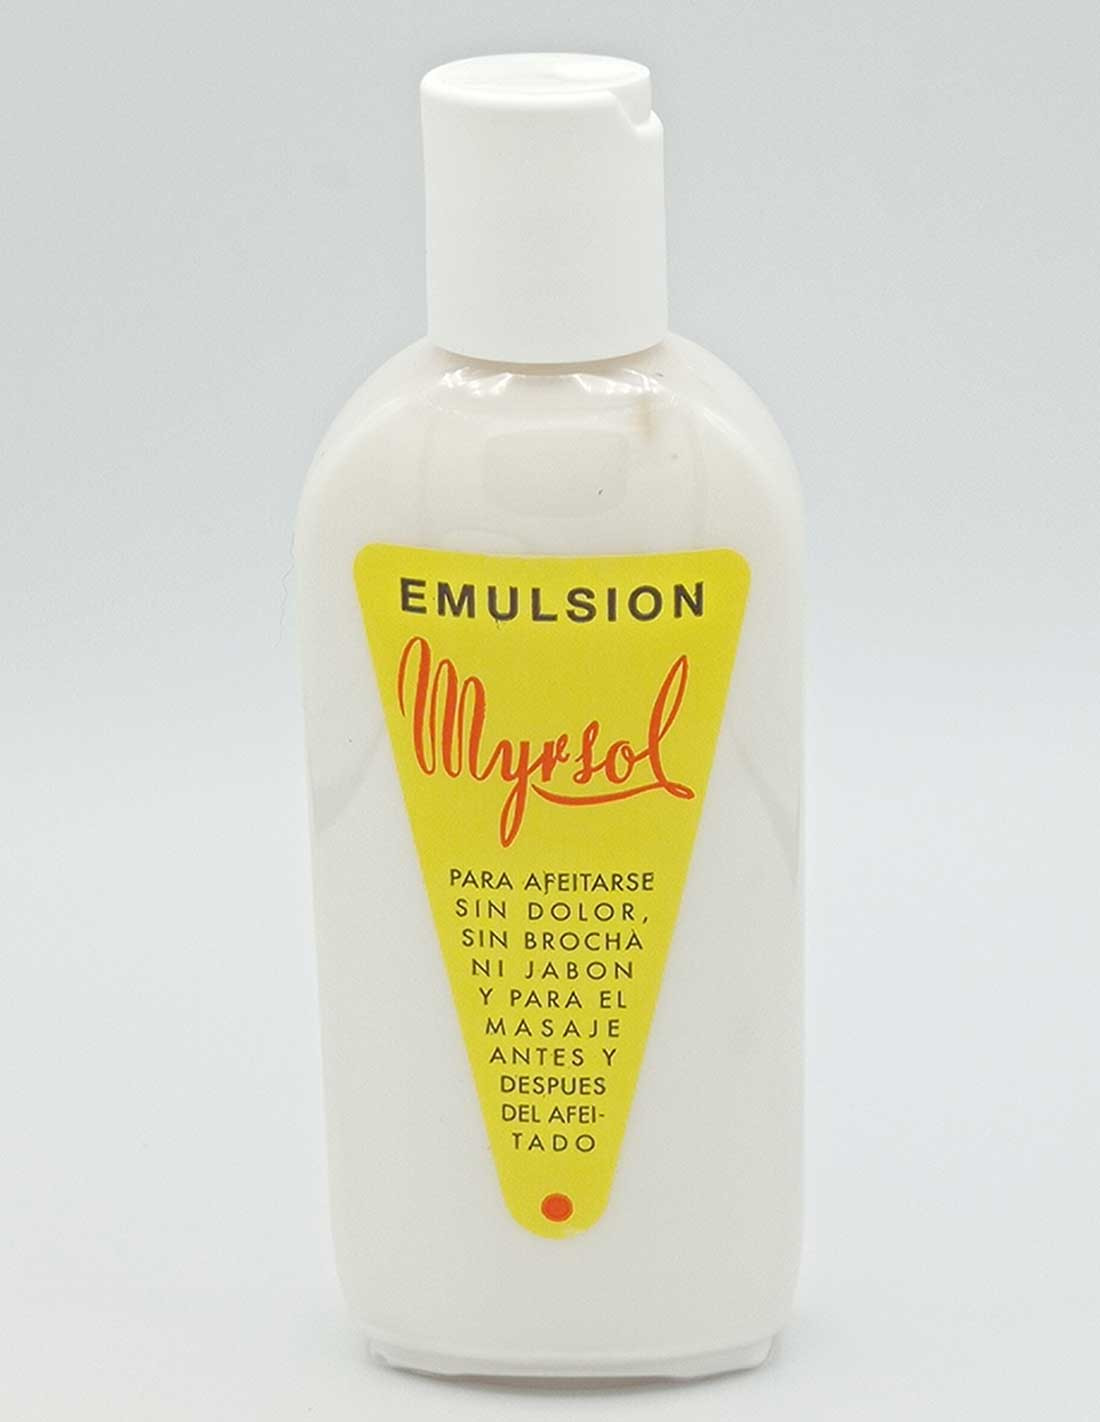 https://www.sensabien.com/pre-afeitado/emulsion-pre-after-shave-de-myrsol-de-200-ml